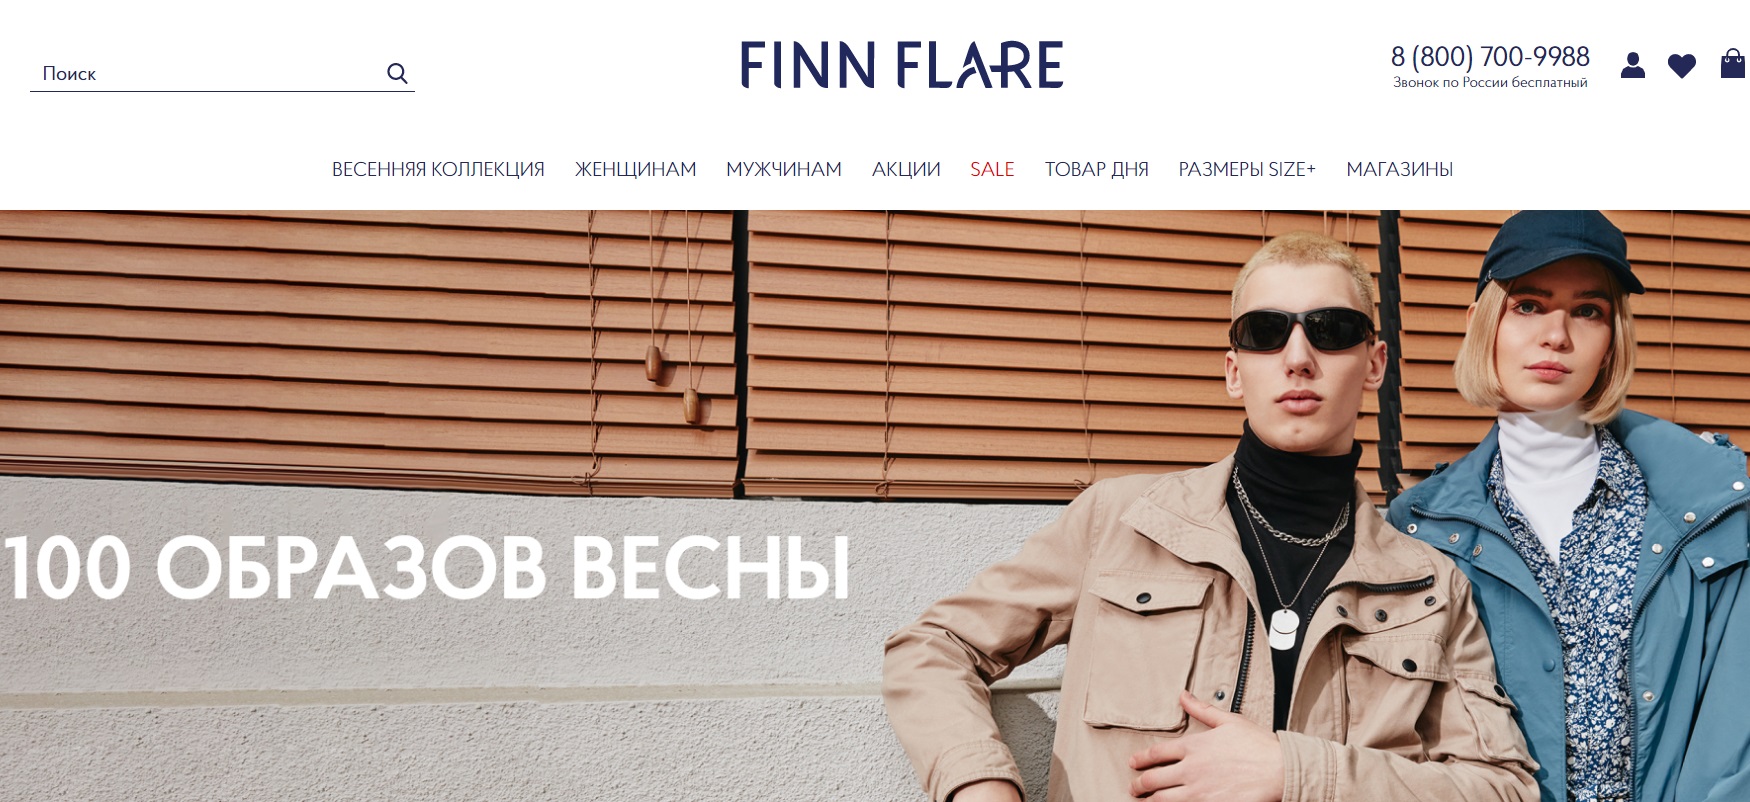 FiNN FLARE официальный сайт интернет-магазина